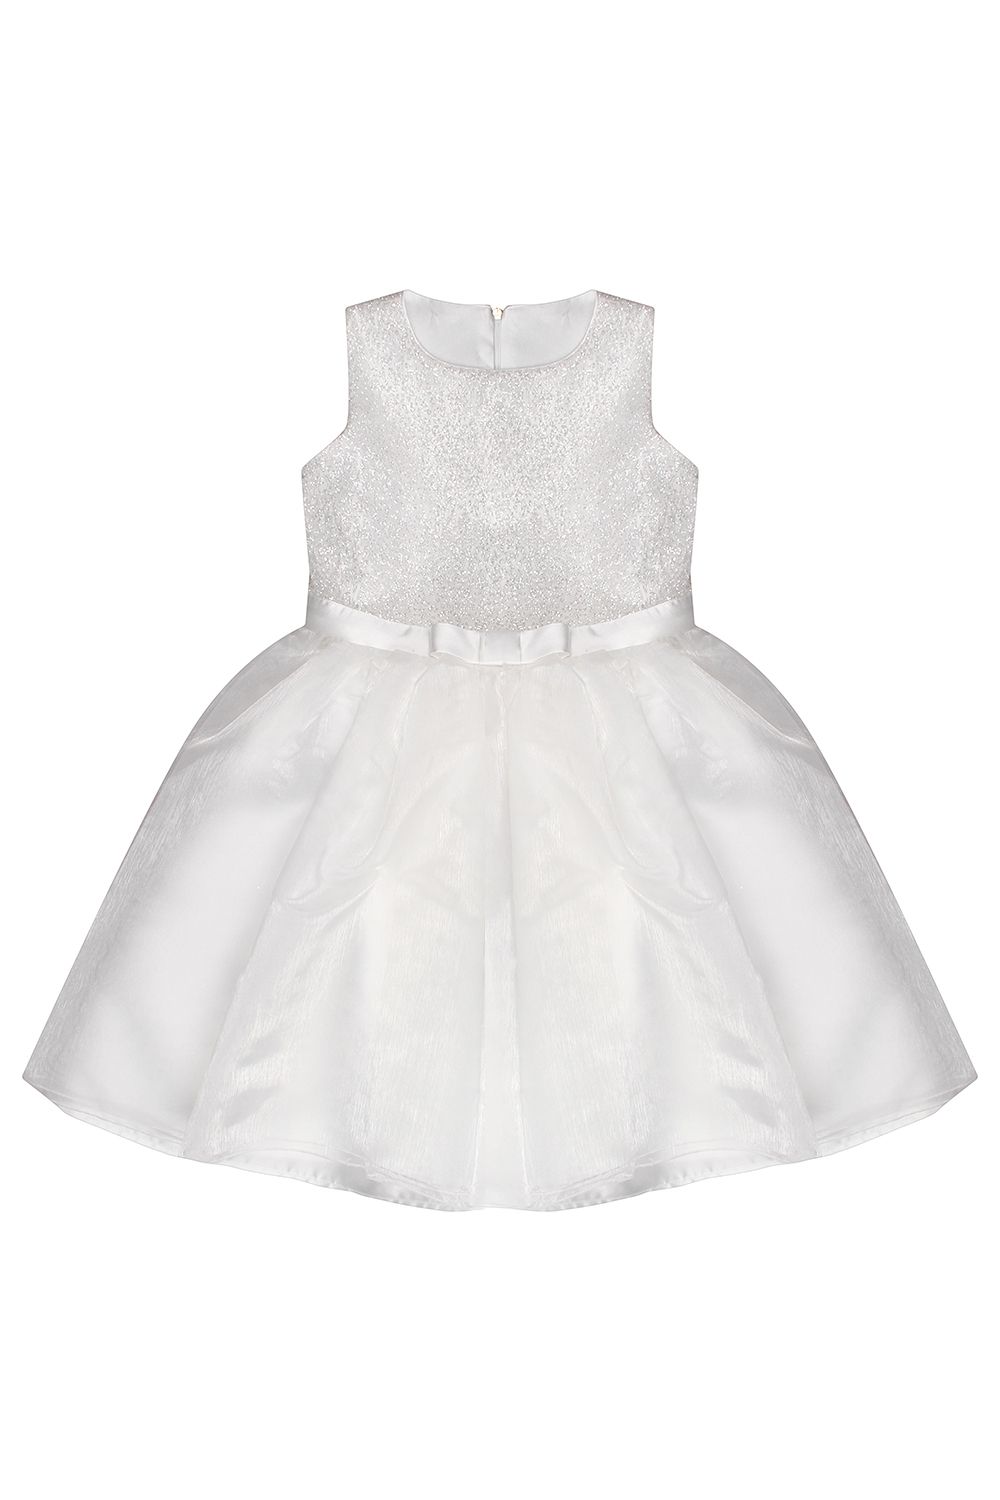 Платье Y-clu', размер 8, цвет белый Y13186 - фото 1